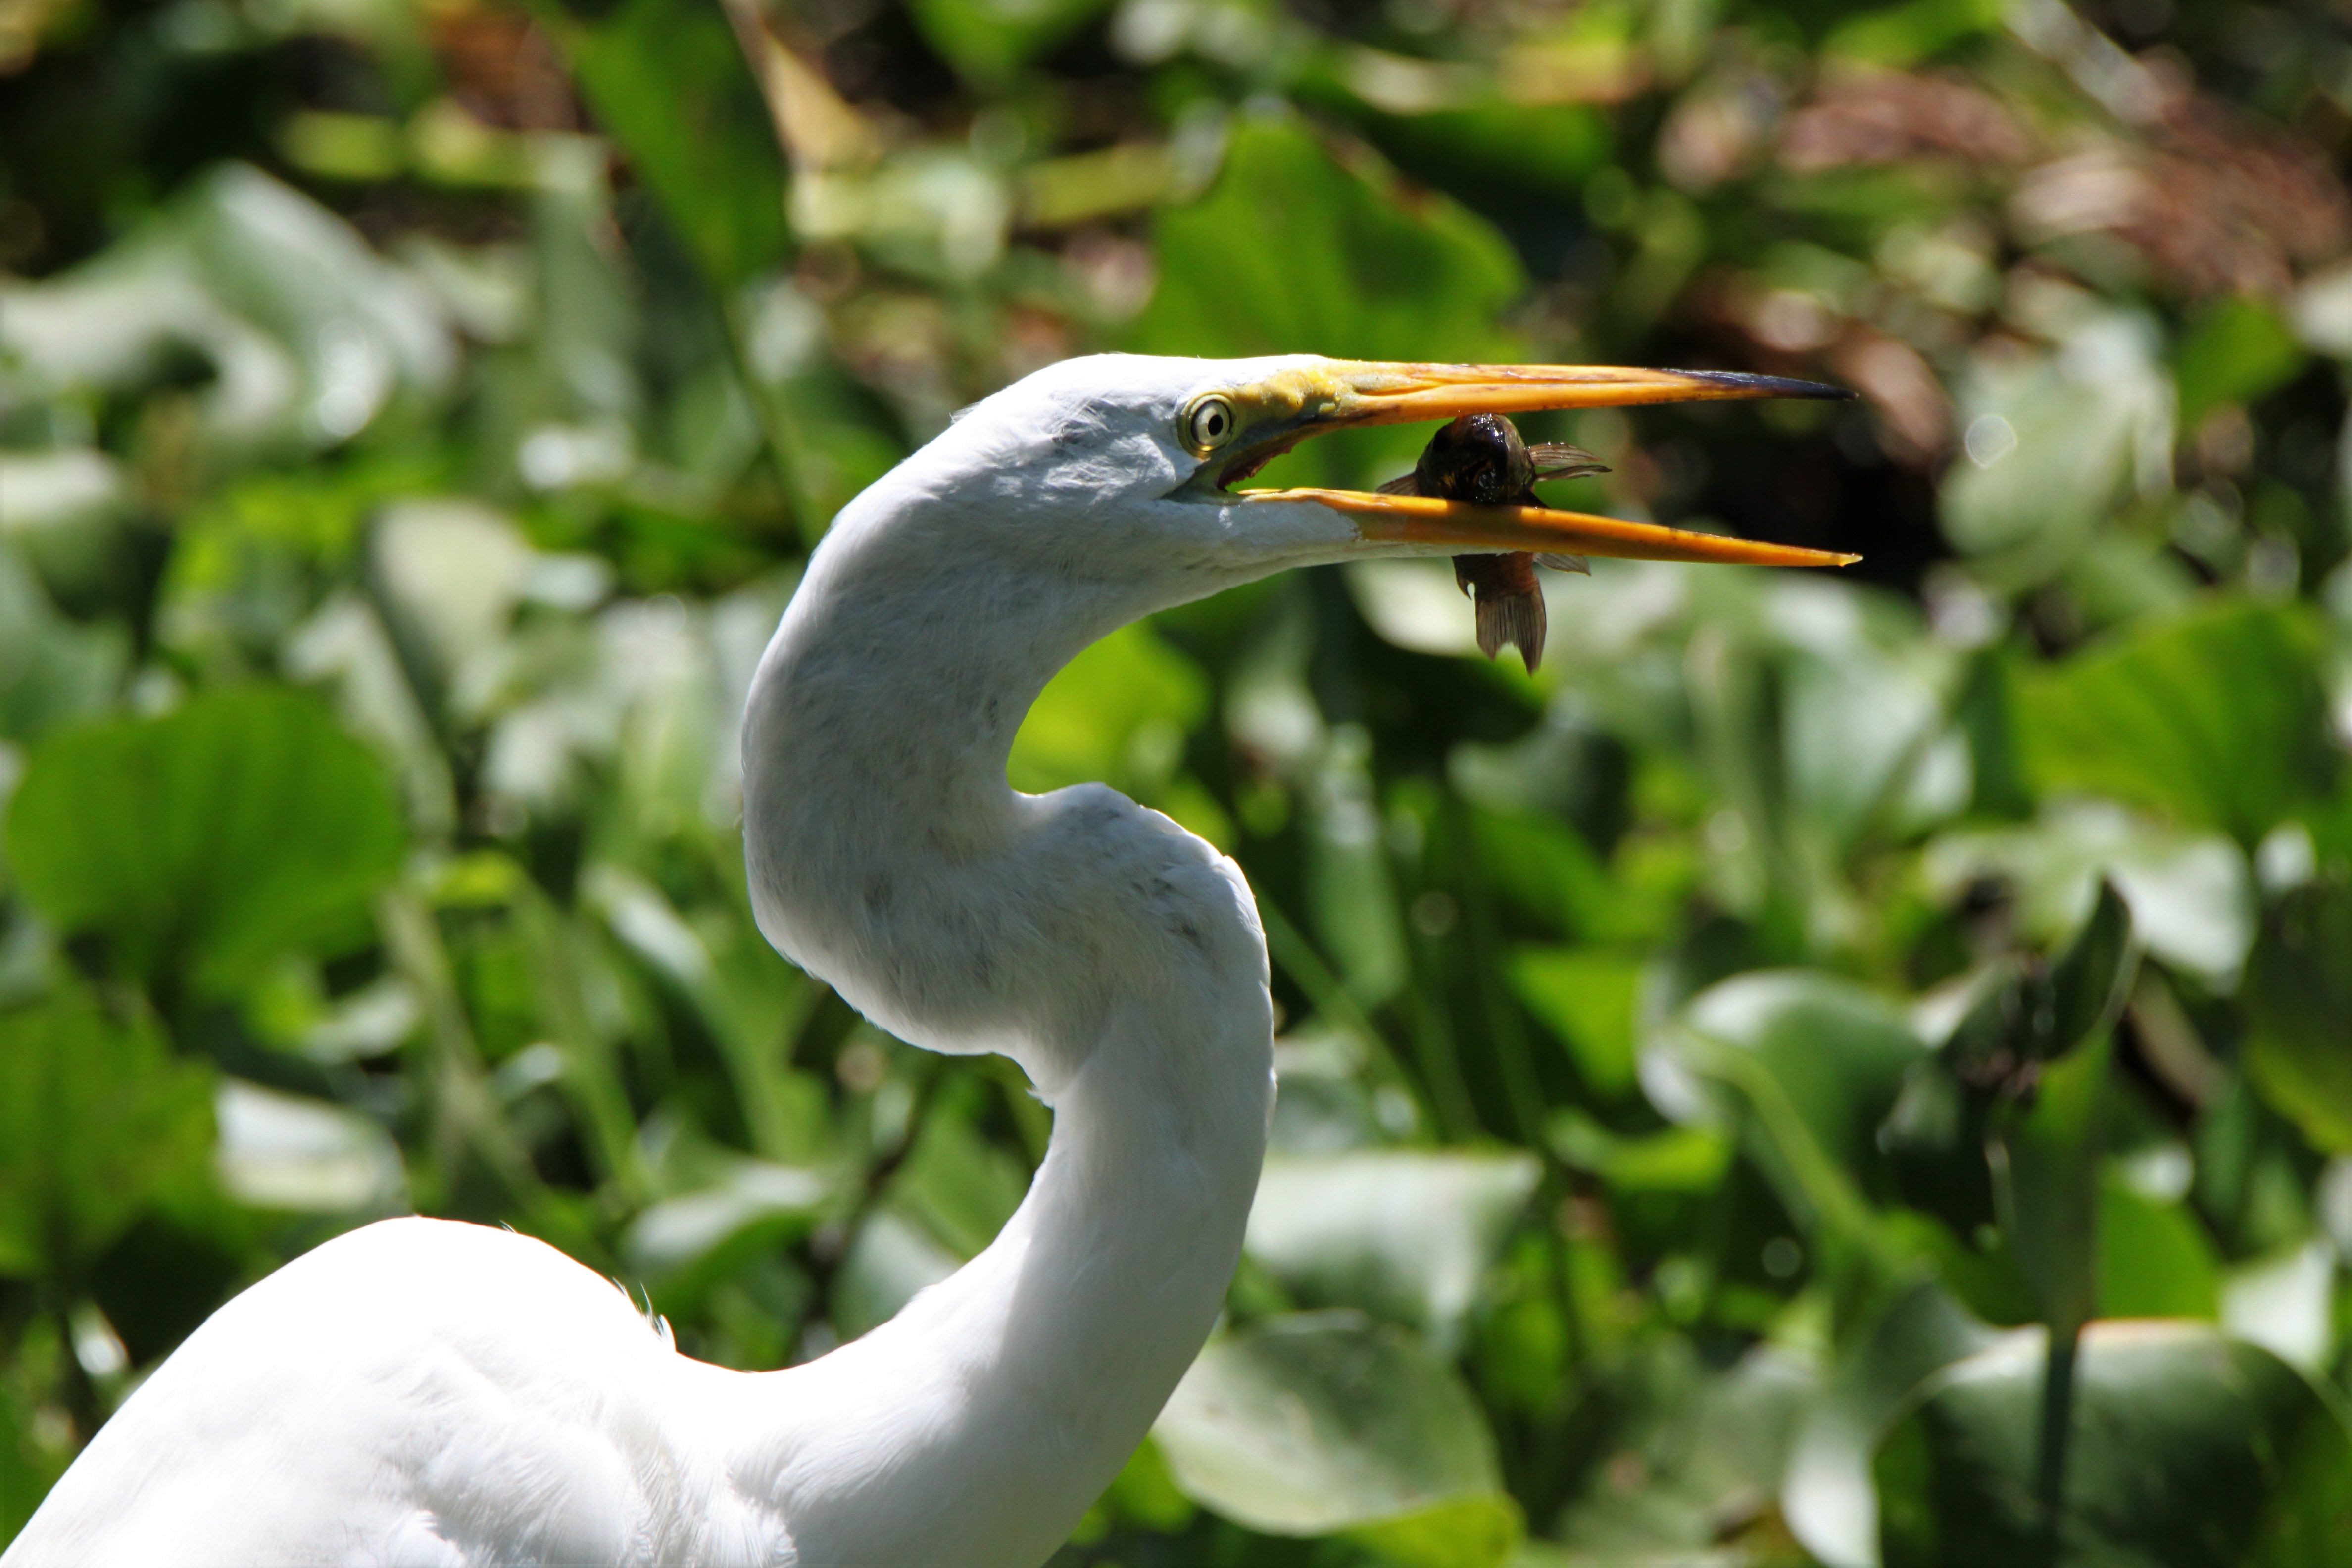 A white bird eating a fish.